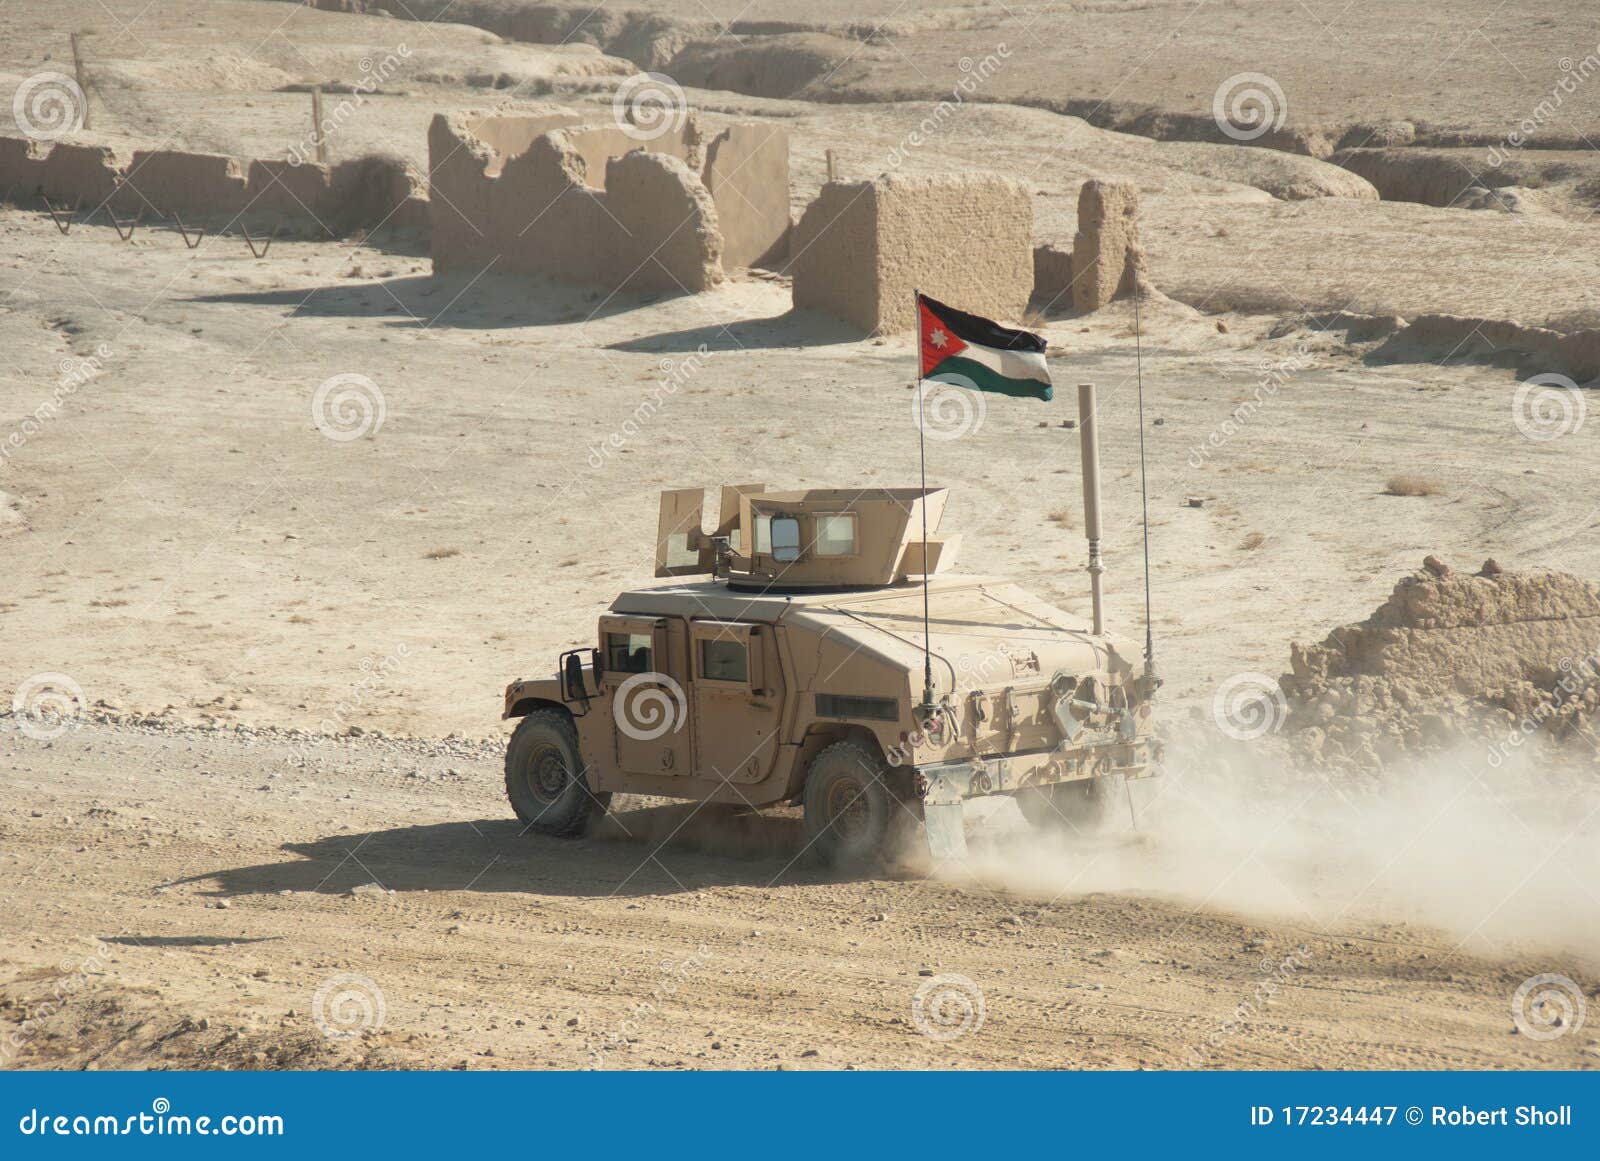 jordanian-army-hmmwv-17234447.jpg